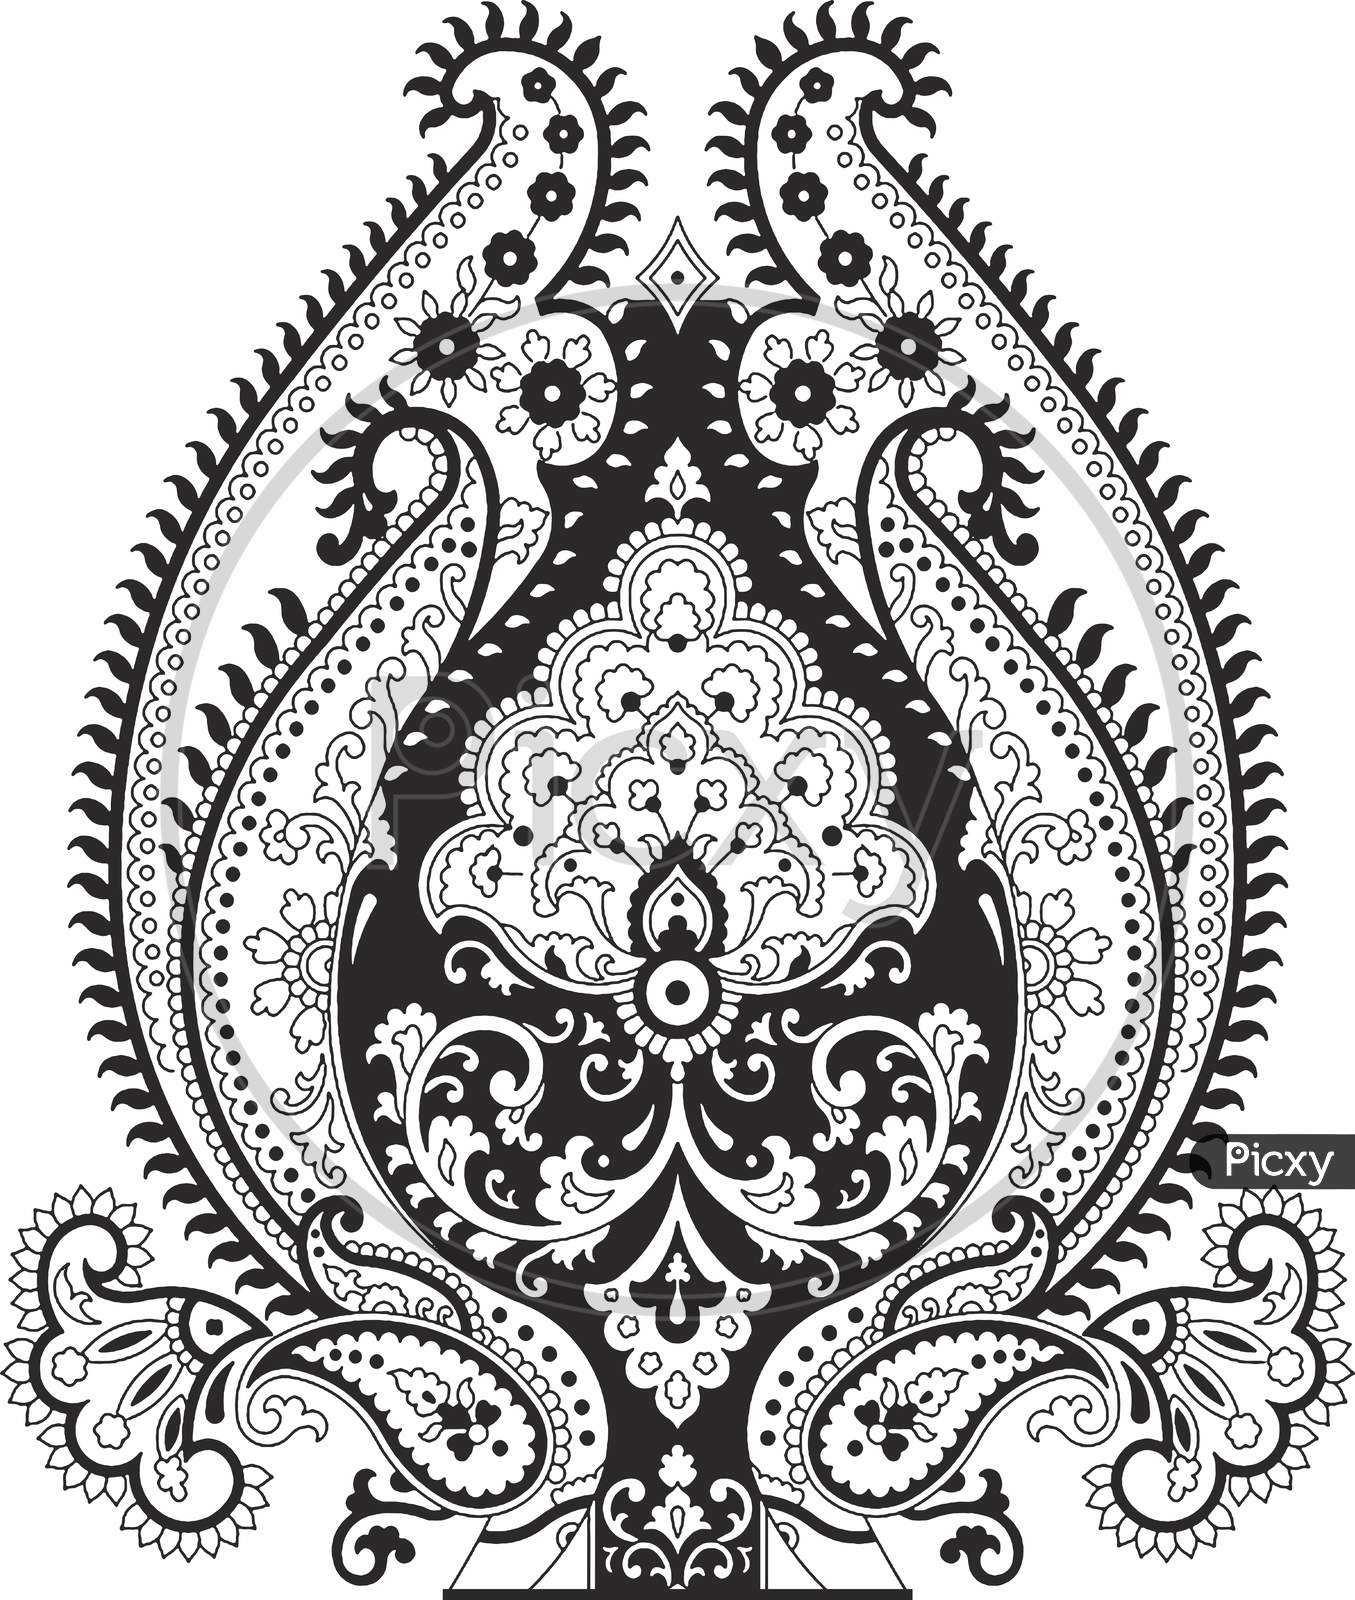 Daaman design sketch art - Designsketch.in